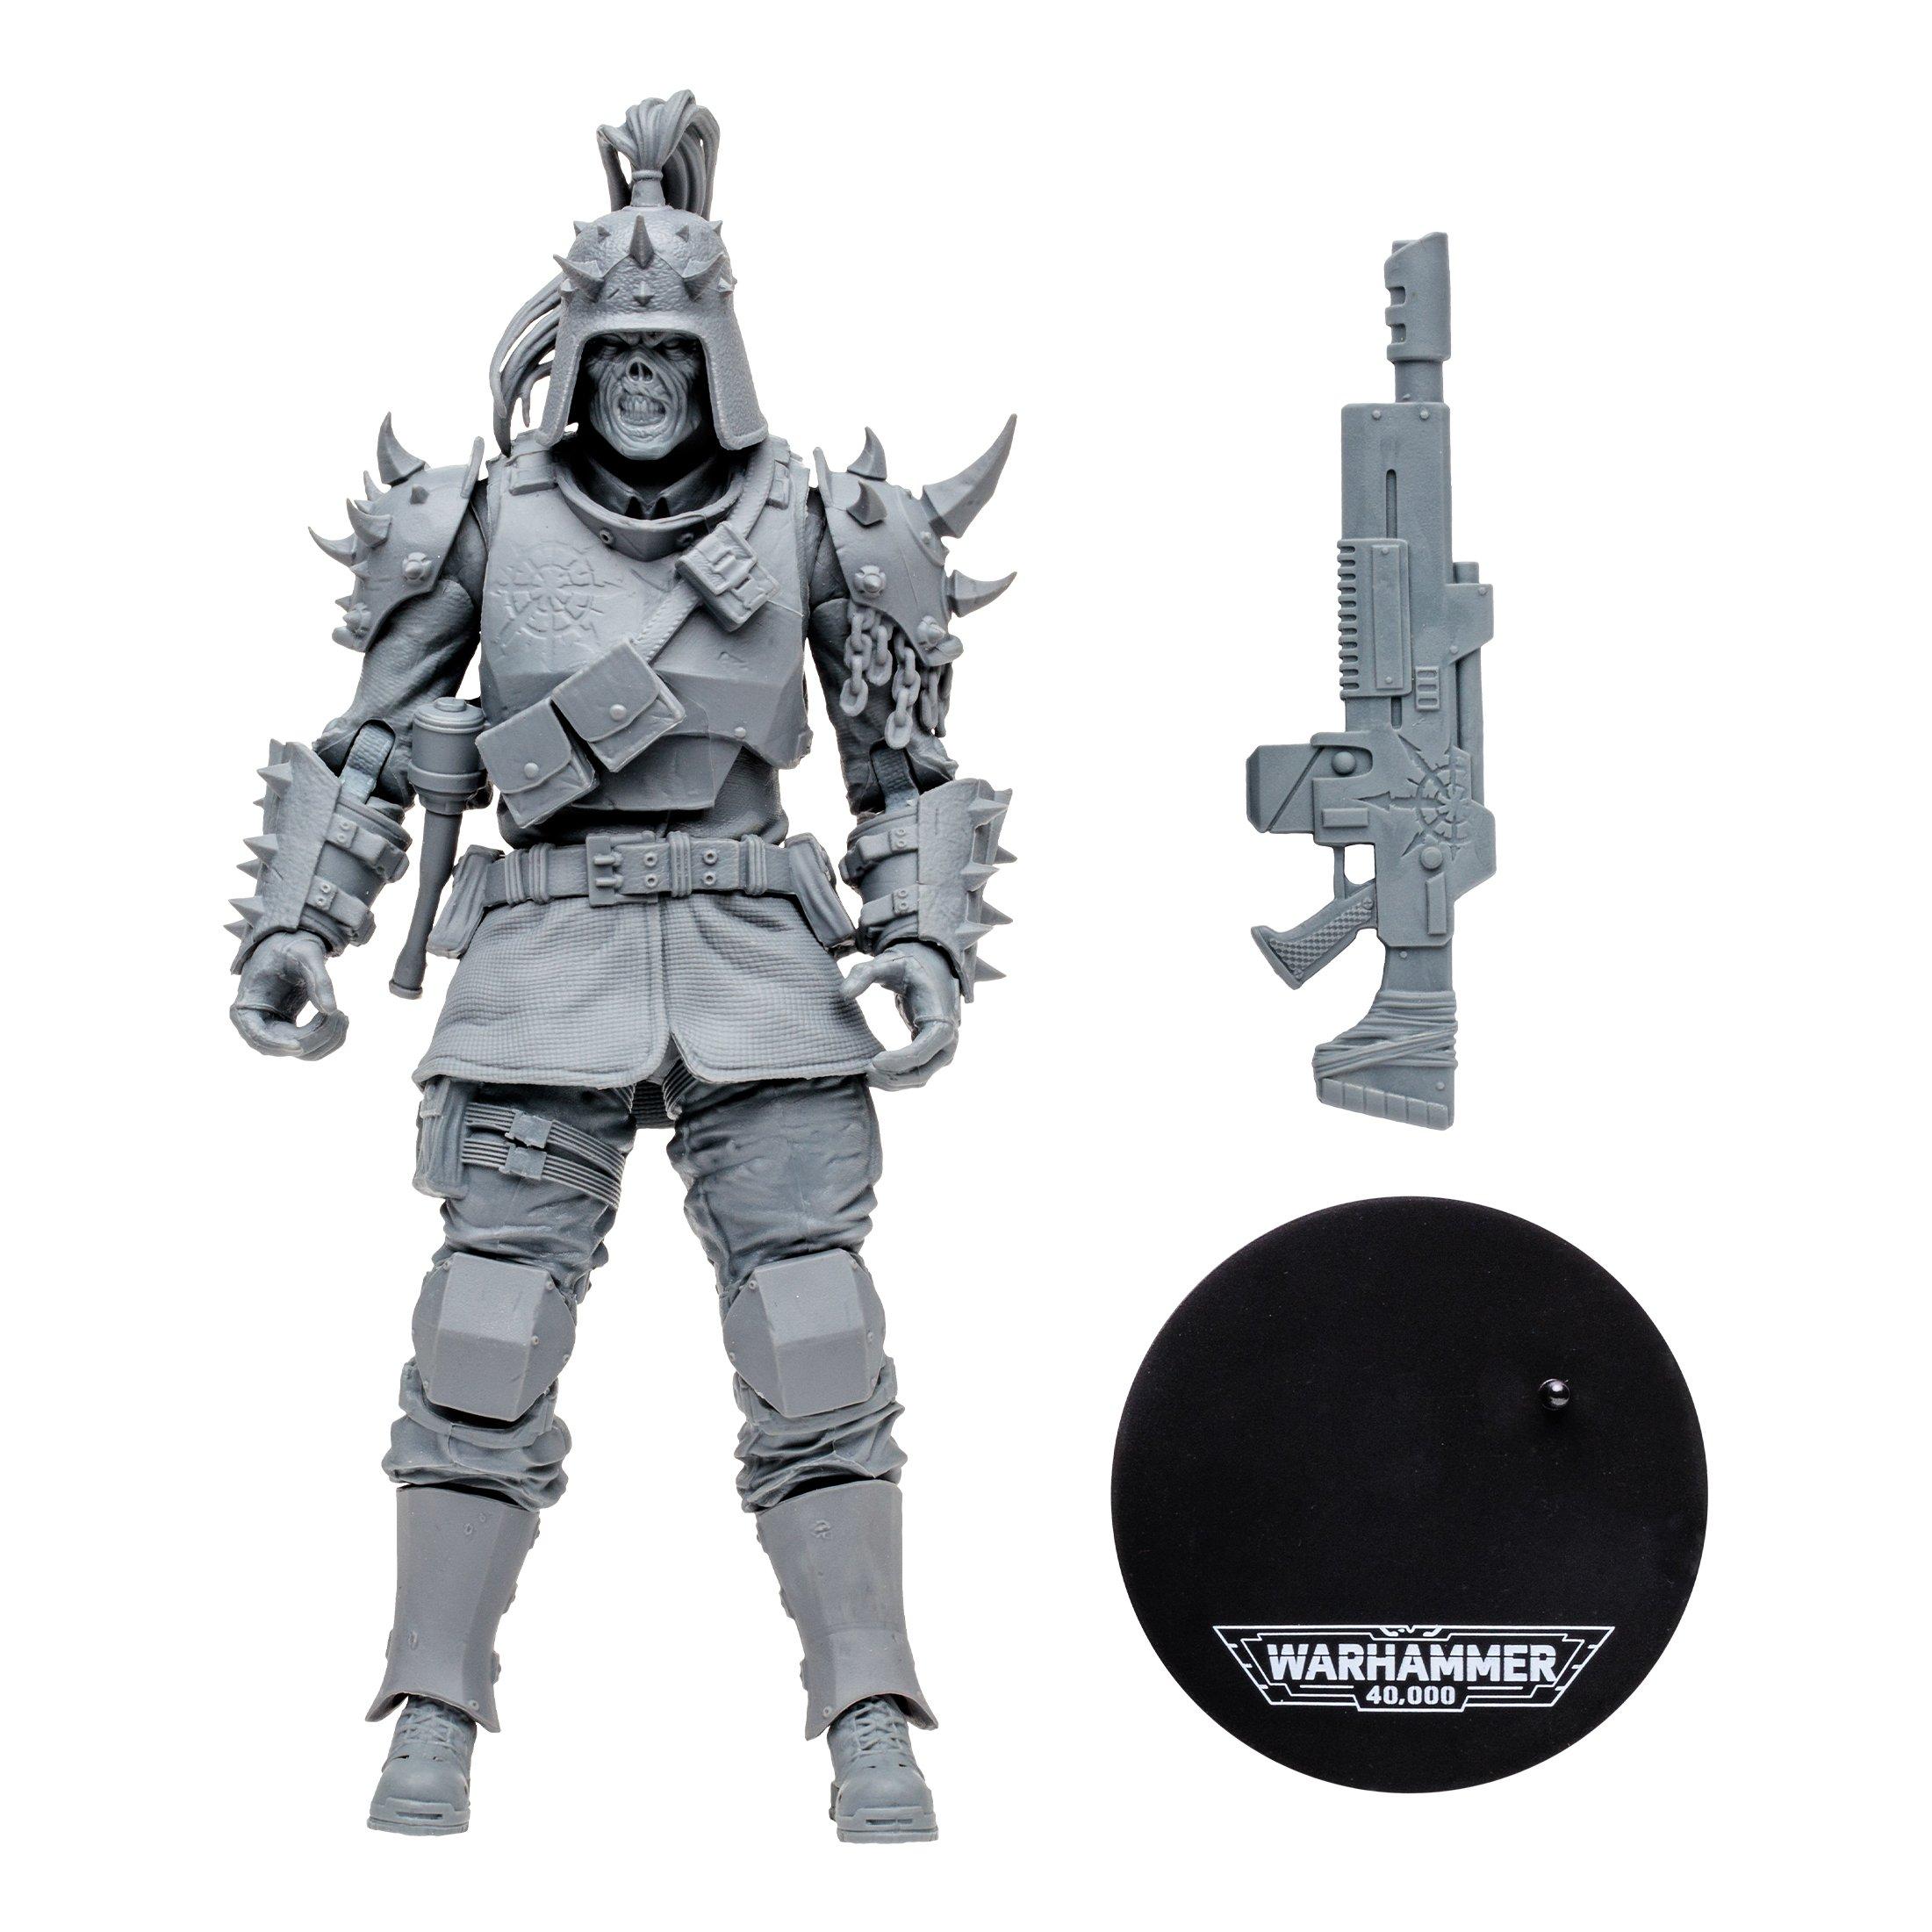 McFarlane Toys Warhammer 40,000 Darktide Traitor Guard Artist Proof 7-in Action Figure